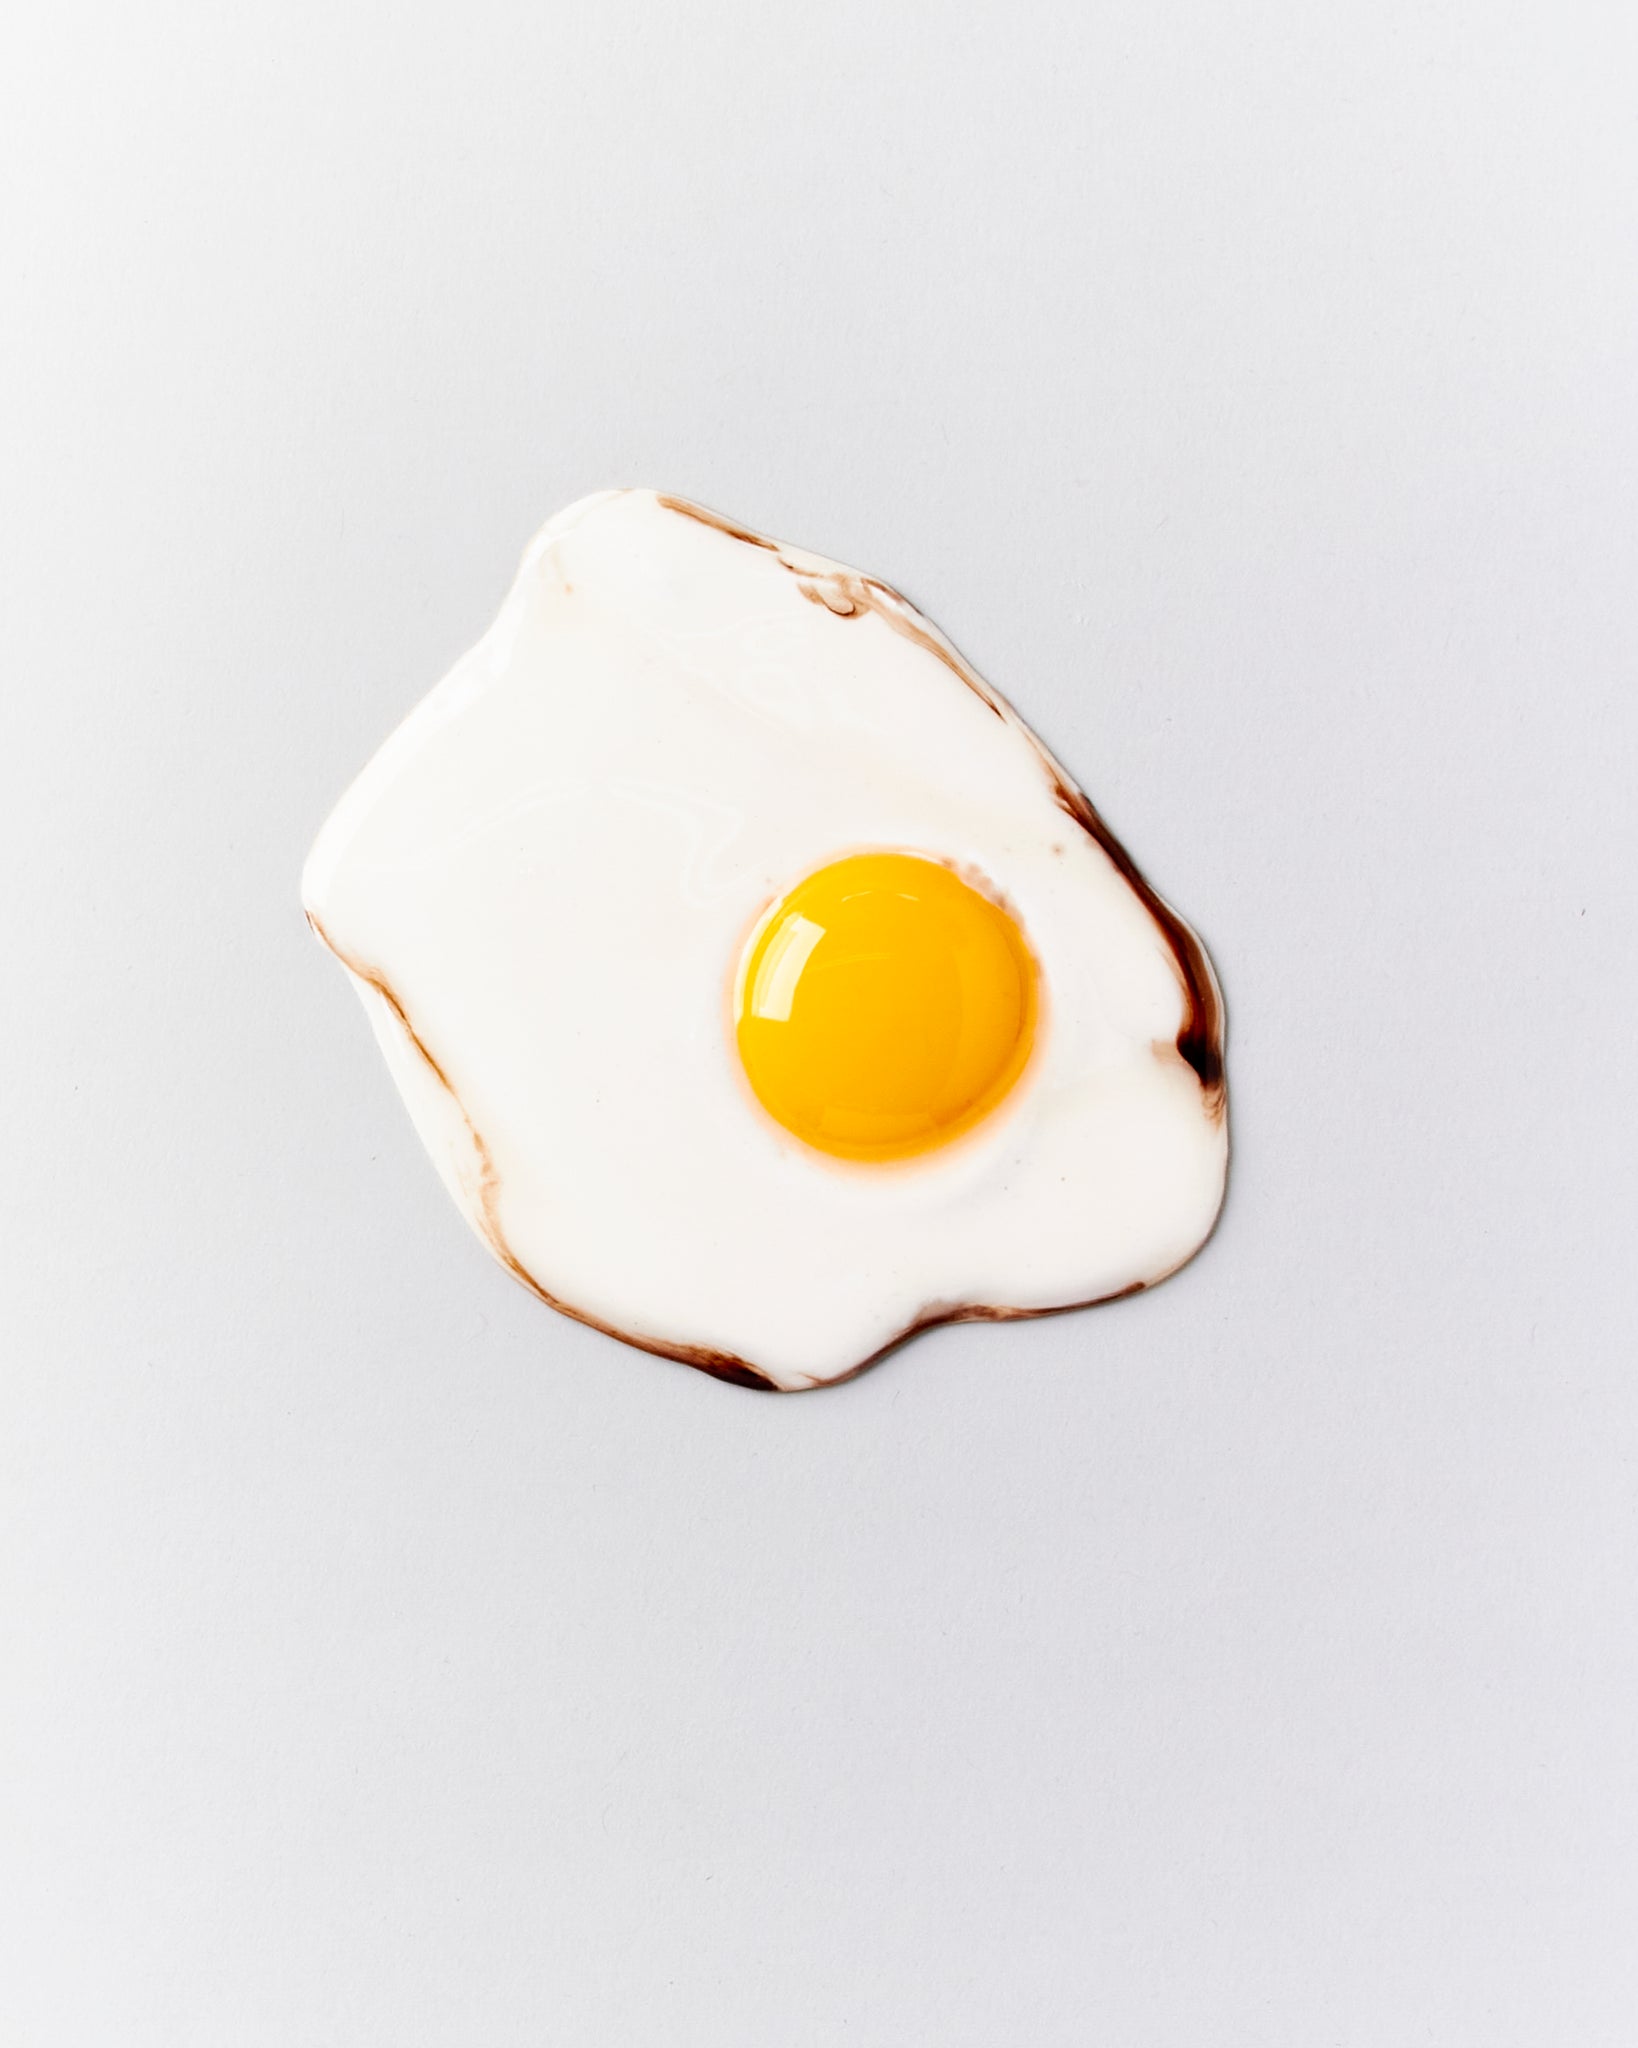 Fried Egg Sculpture